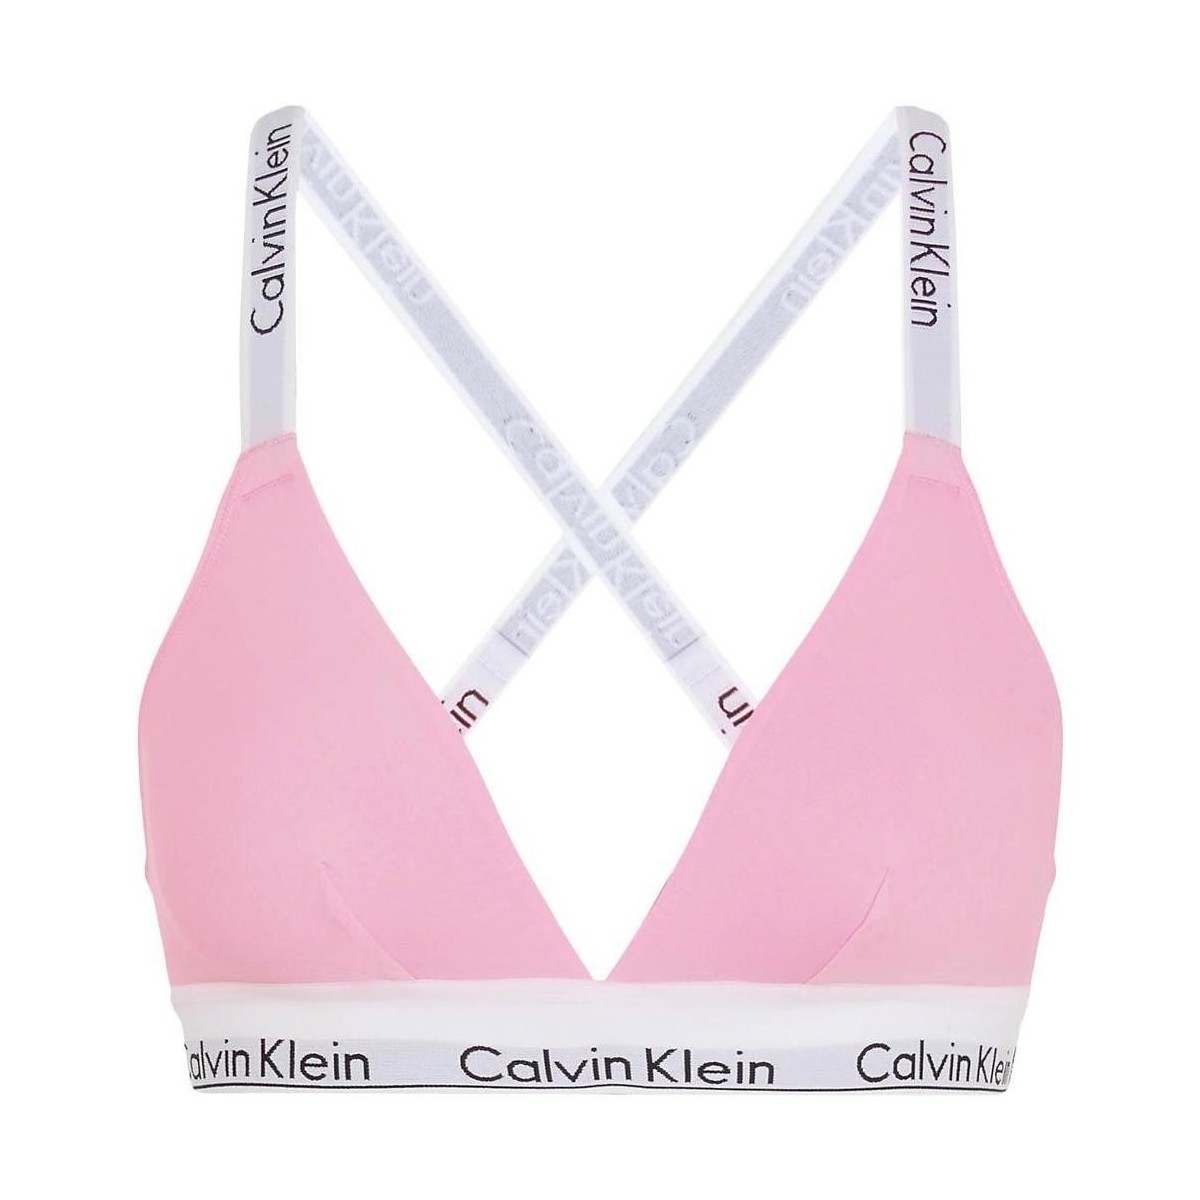 textil Mujer Sujetador deportivo  Calvin Klein Jeans UNLINED BRALETTE Rosa